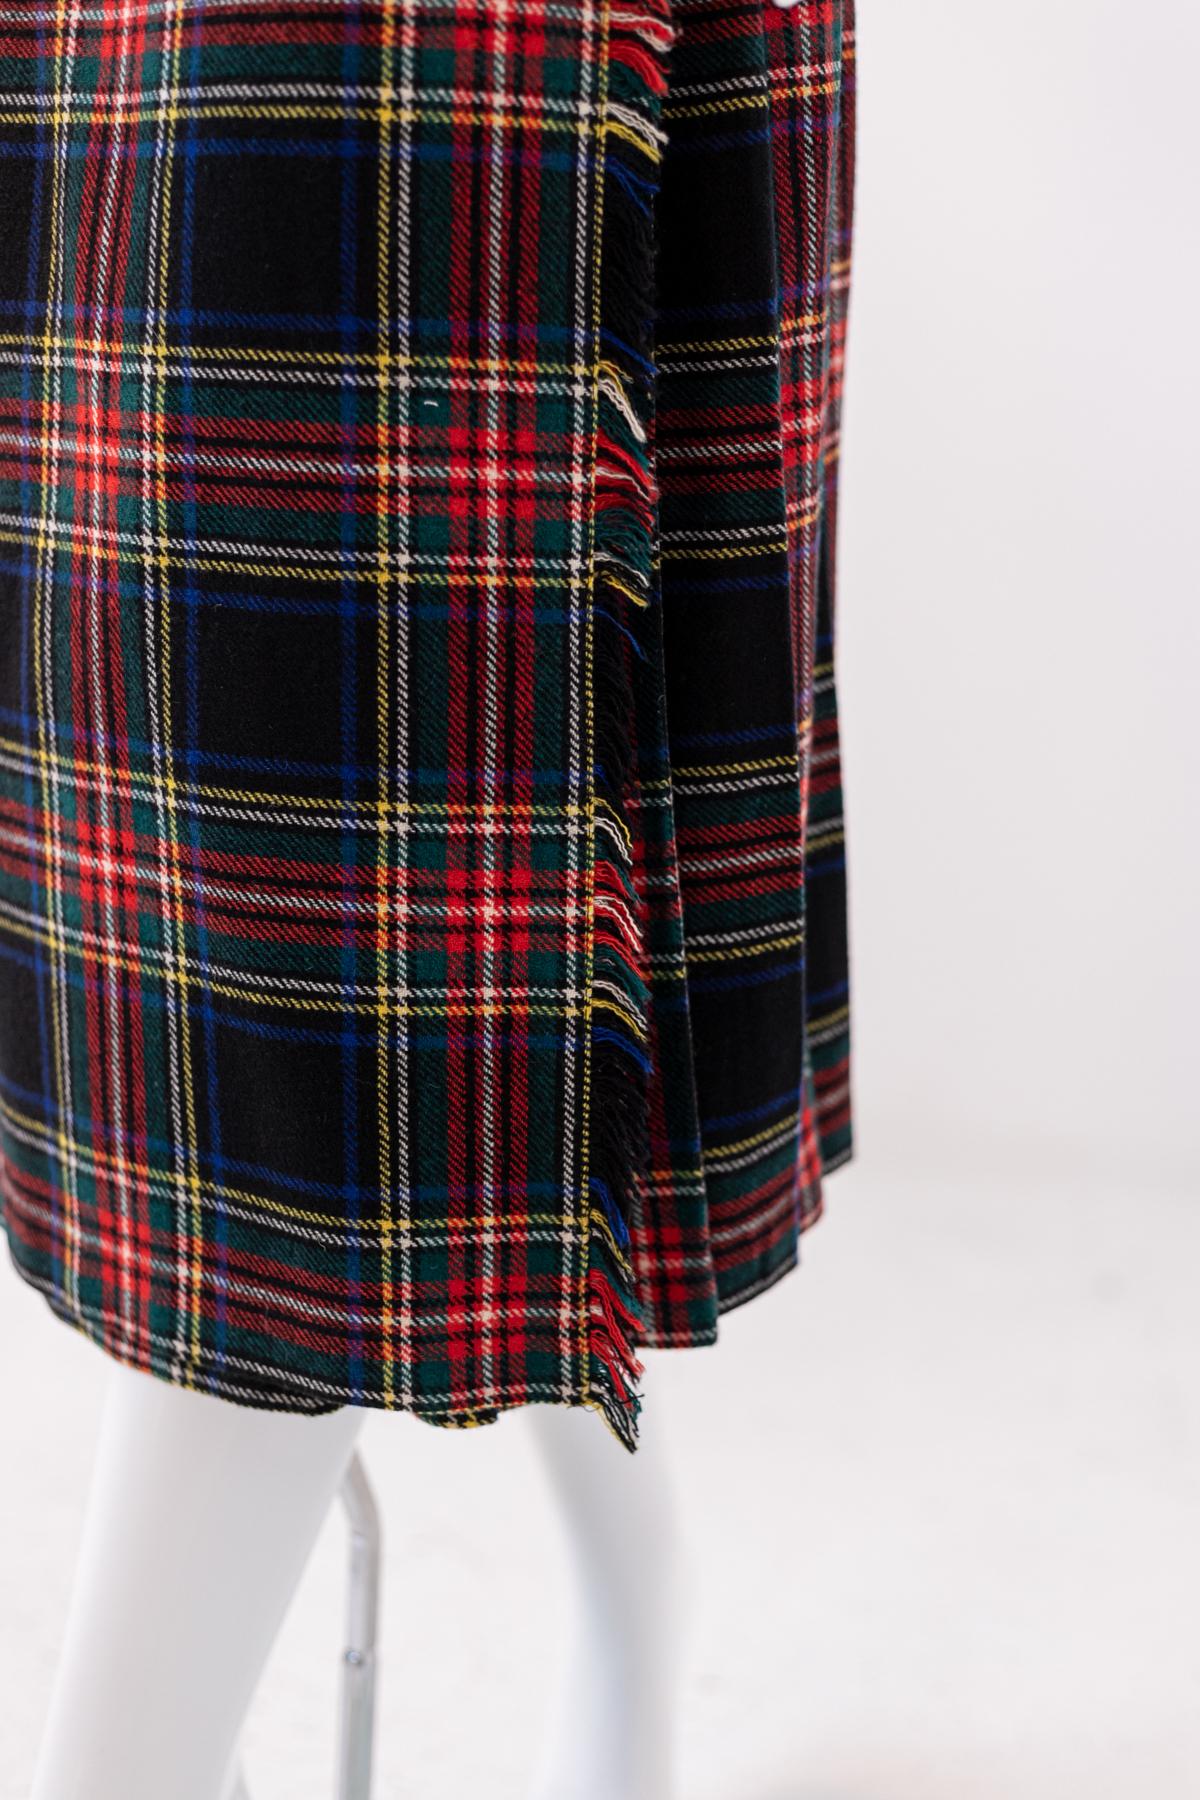 Gray Clan Laird Vintage Scottish Skirt For Sale